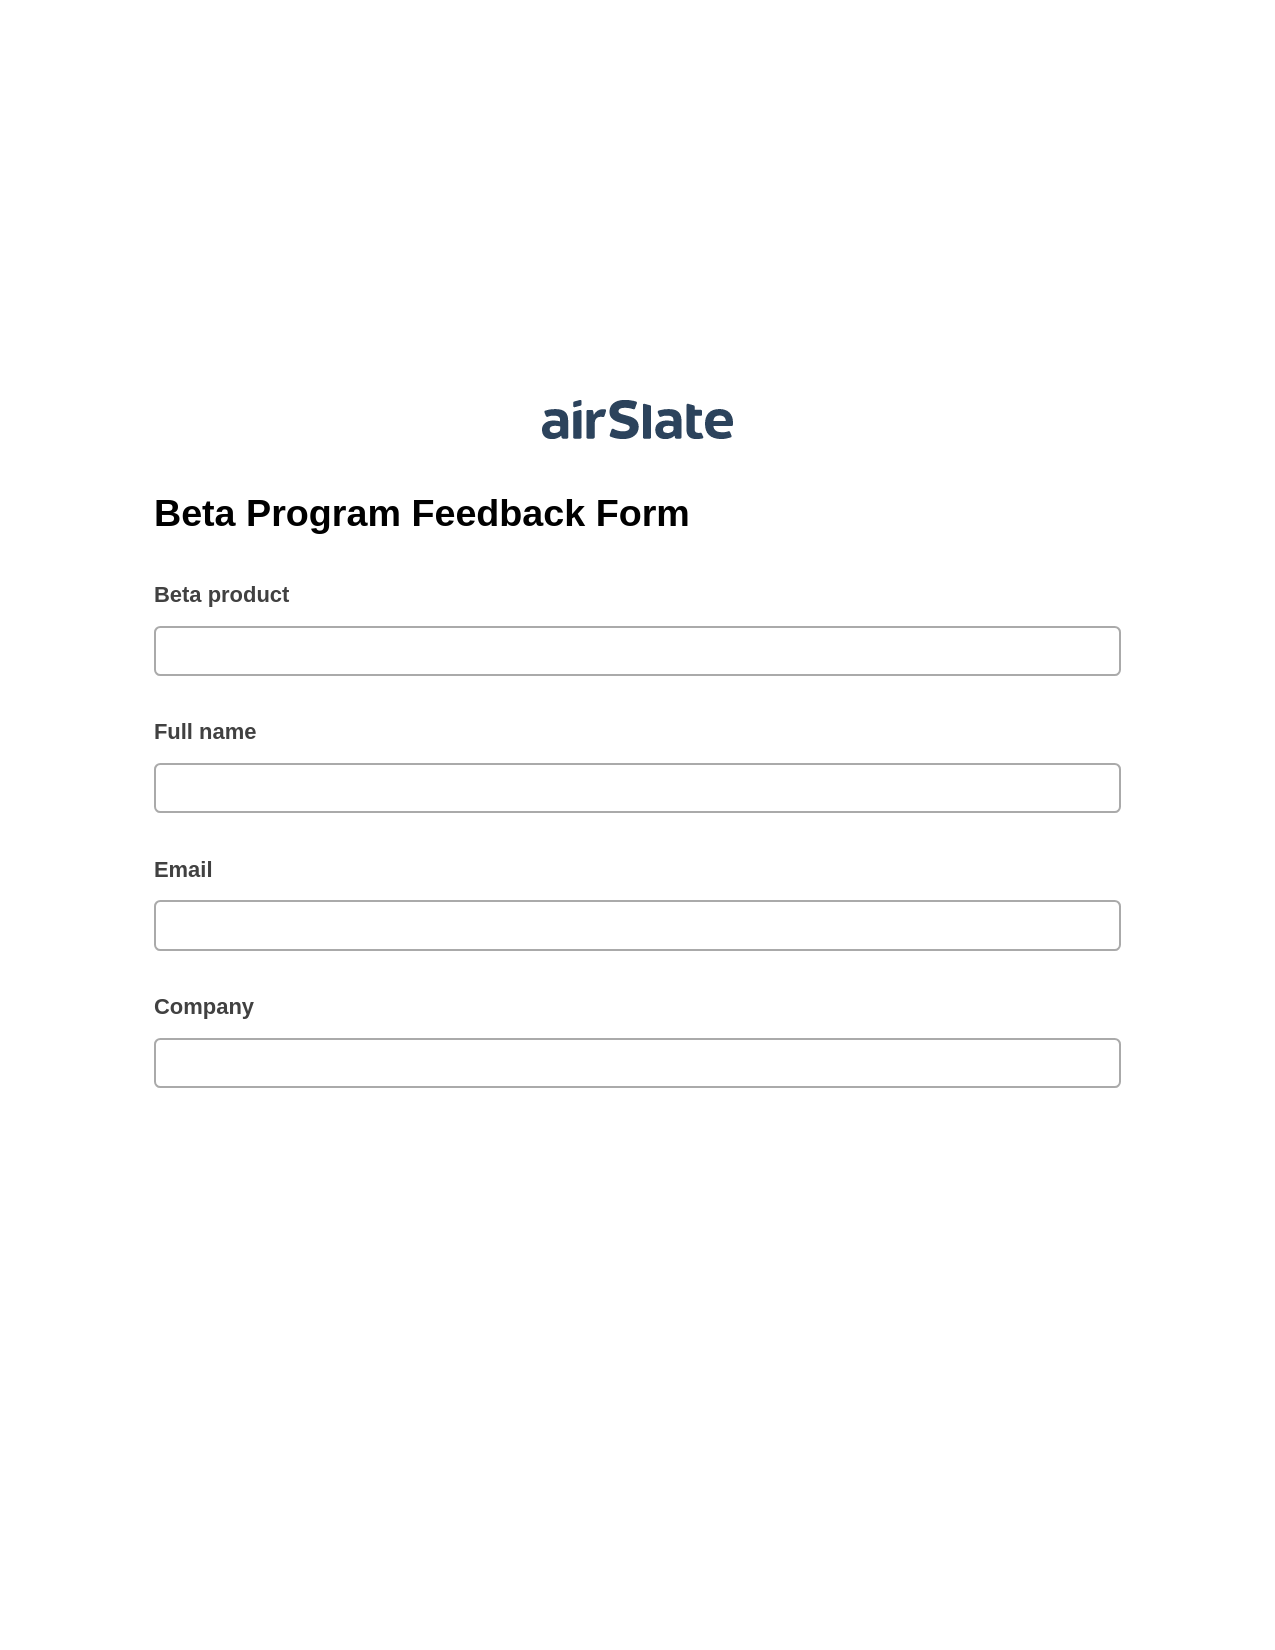 Beta Program Feedback Form Pre-fill Document Bot, Audit Trail Bot, Archive to SharePoint Folder Bot